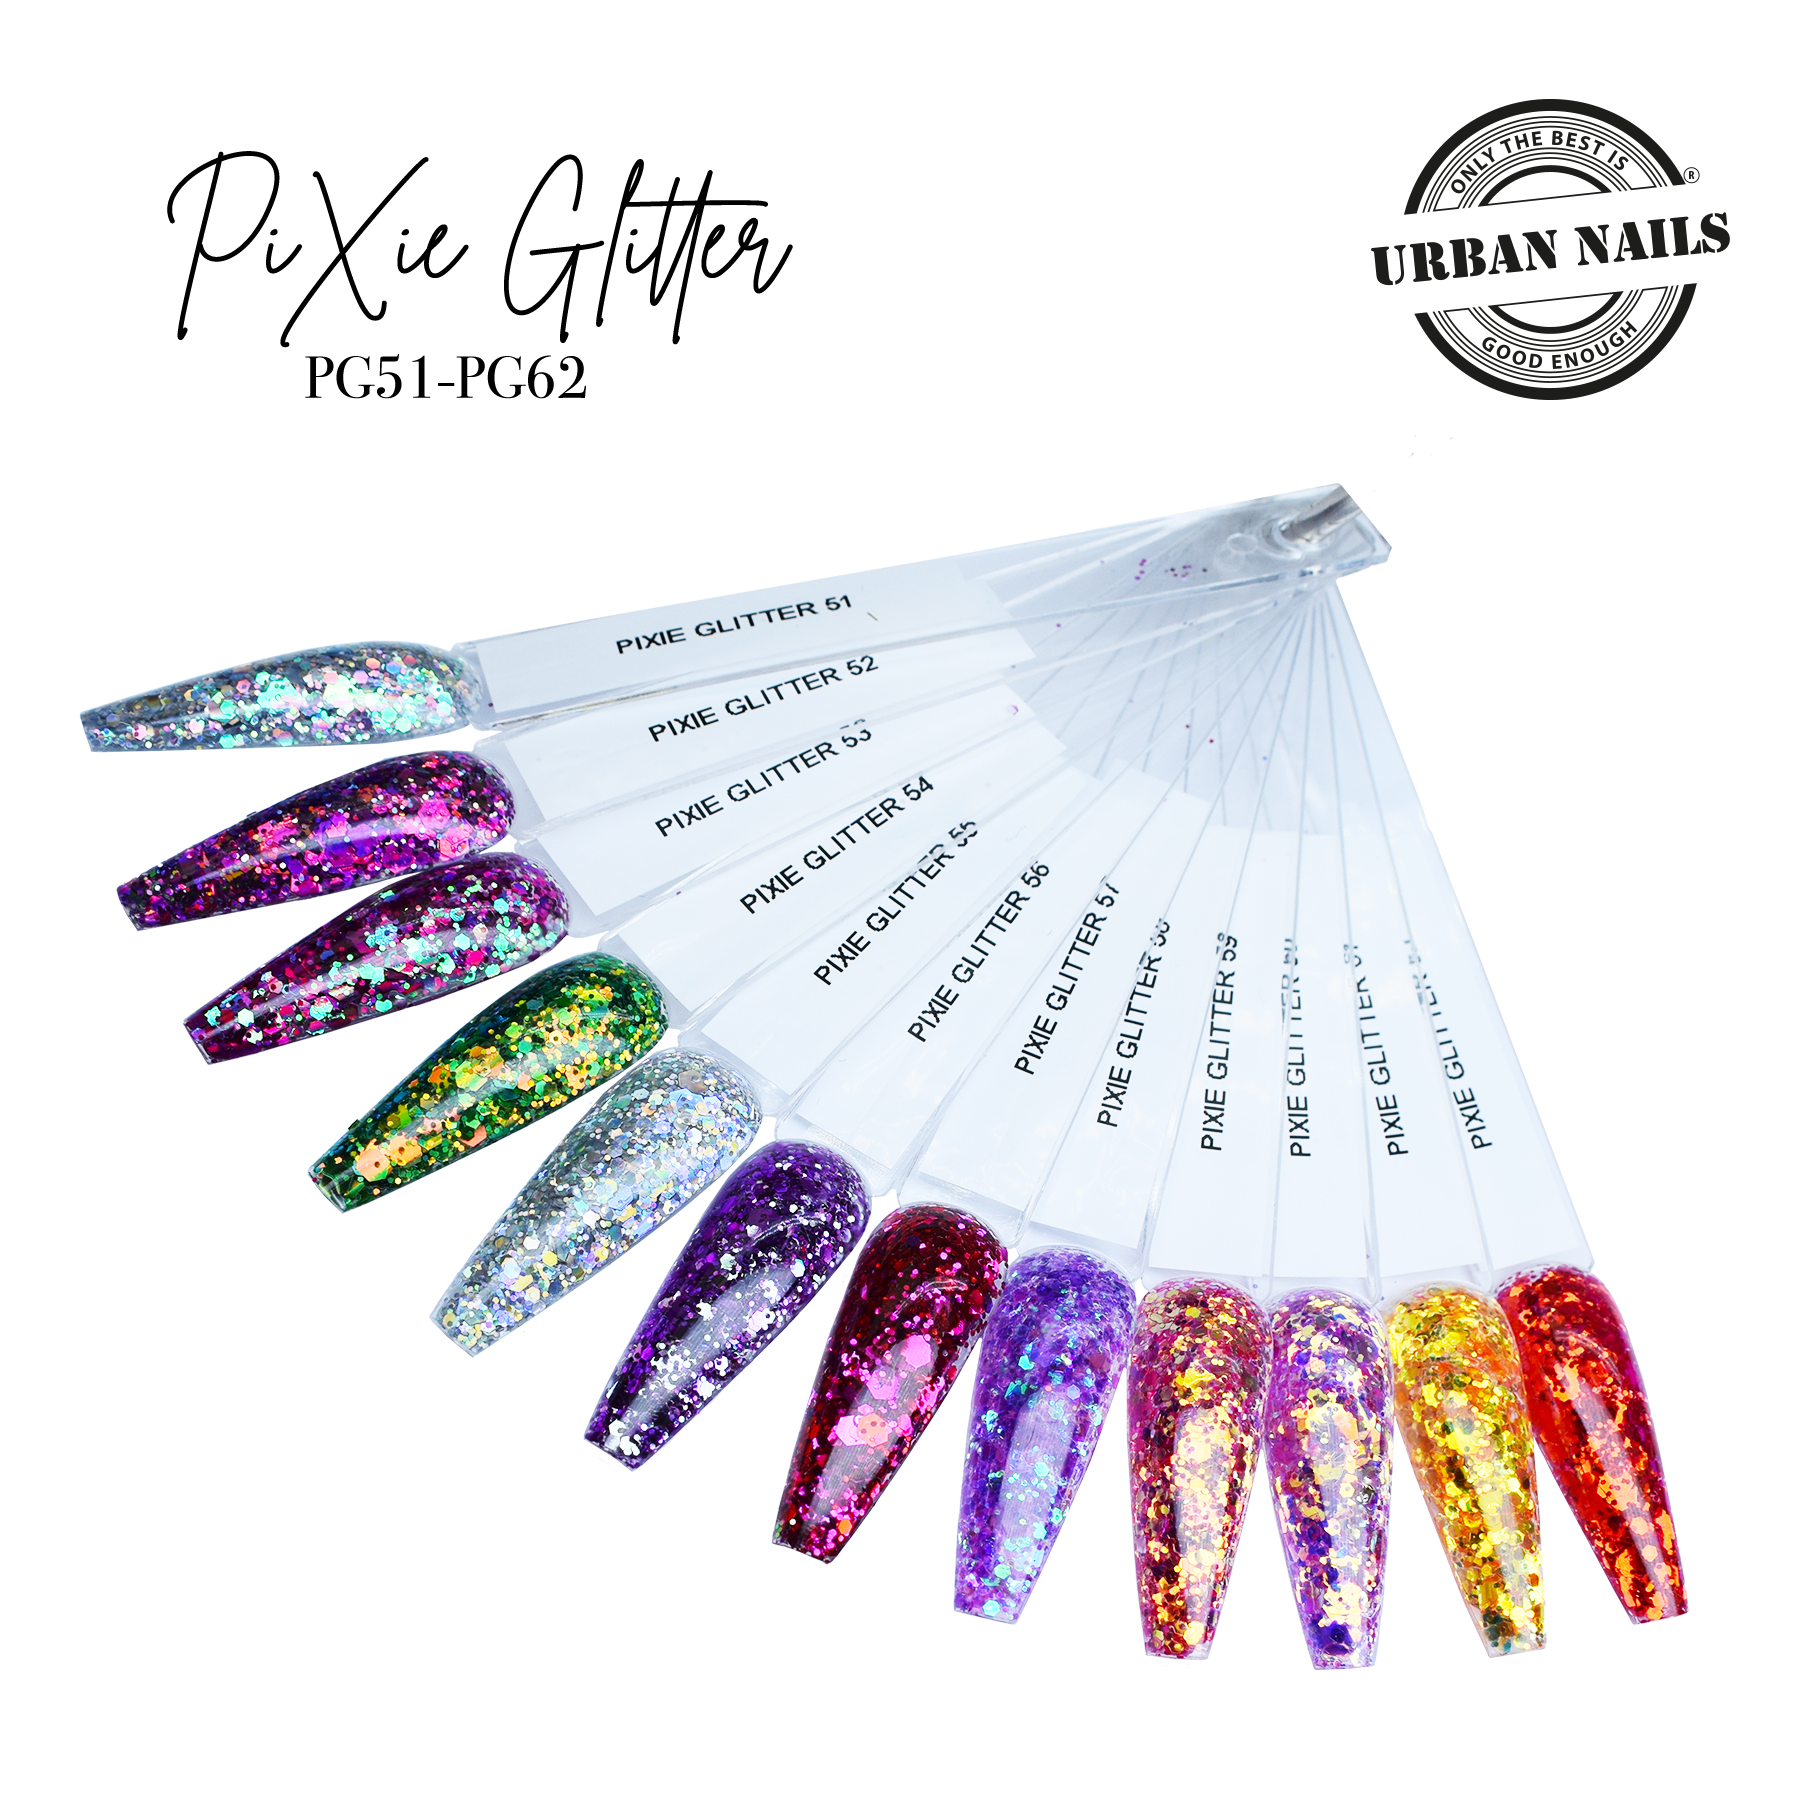 Urban Nails Pixie Glitter PG53 Multi Mix Roze